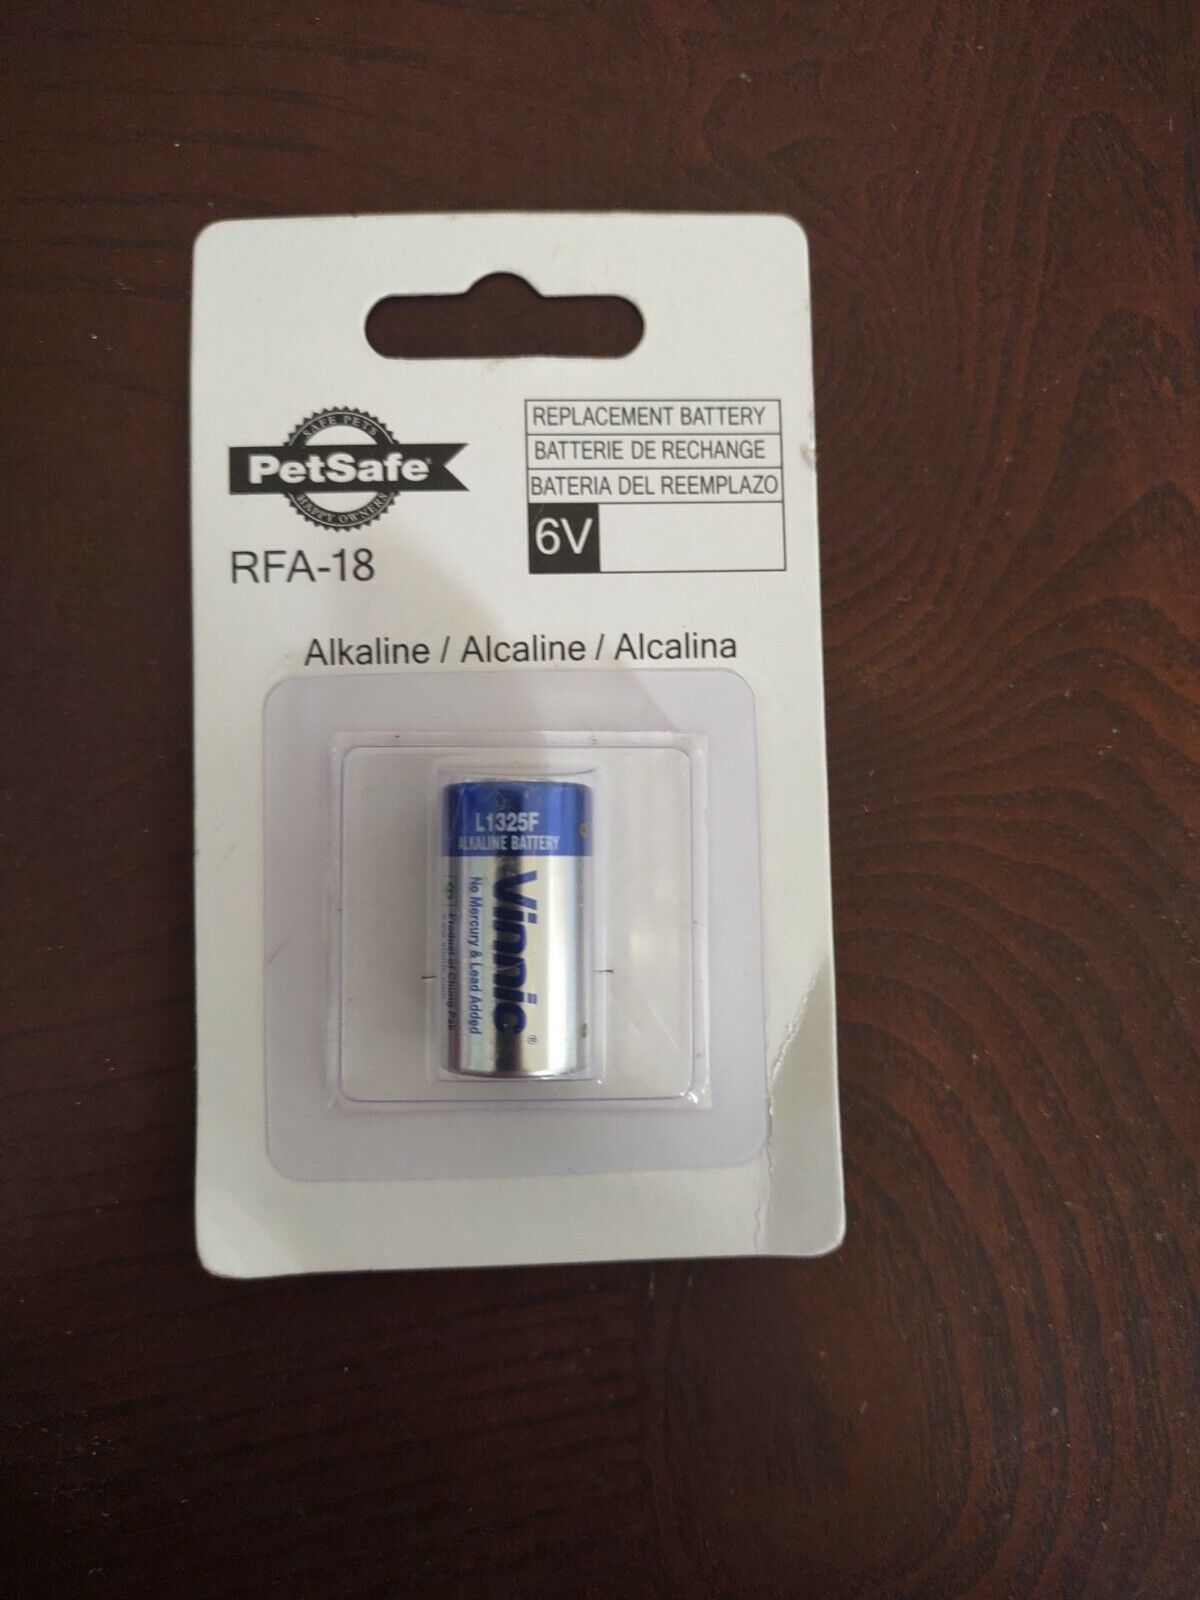 PetSafe Alkaline 6-Volt Battery - Single Battery RFA-18-11-NEW-SHIPS N 24 HOURS - $8.79